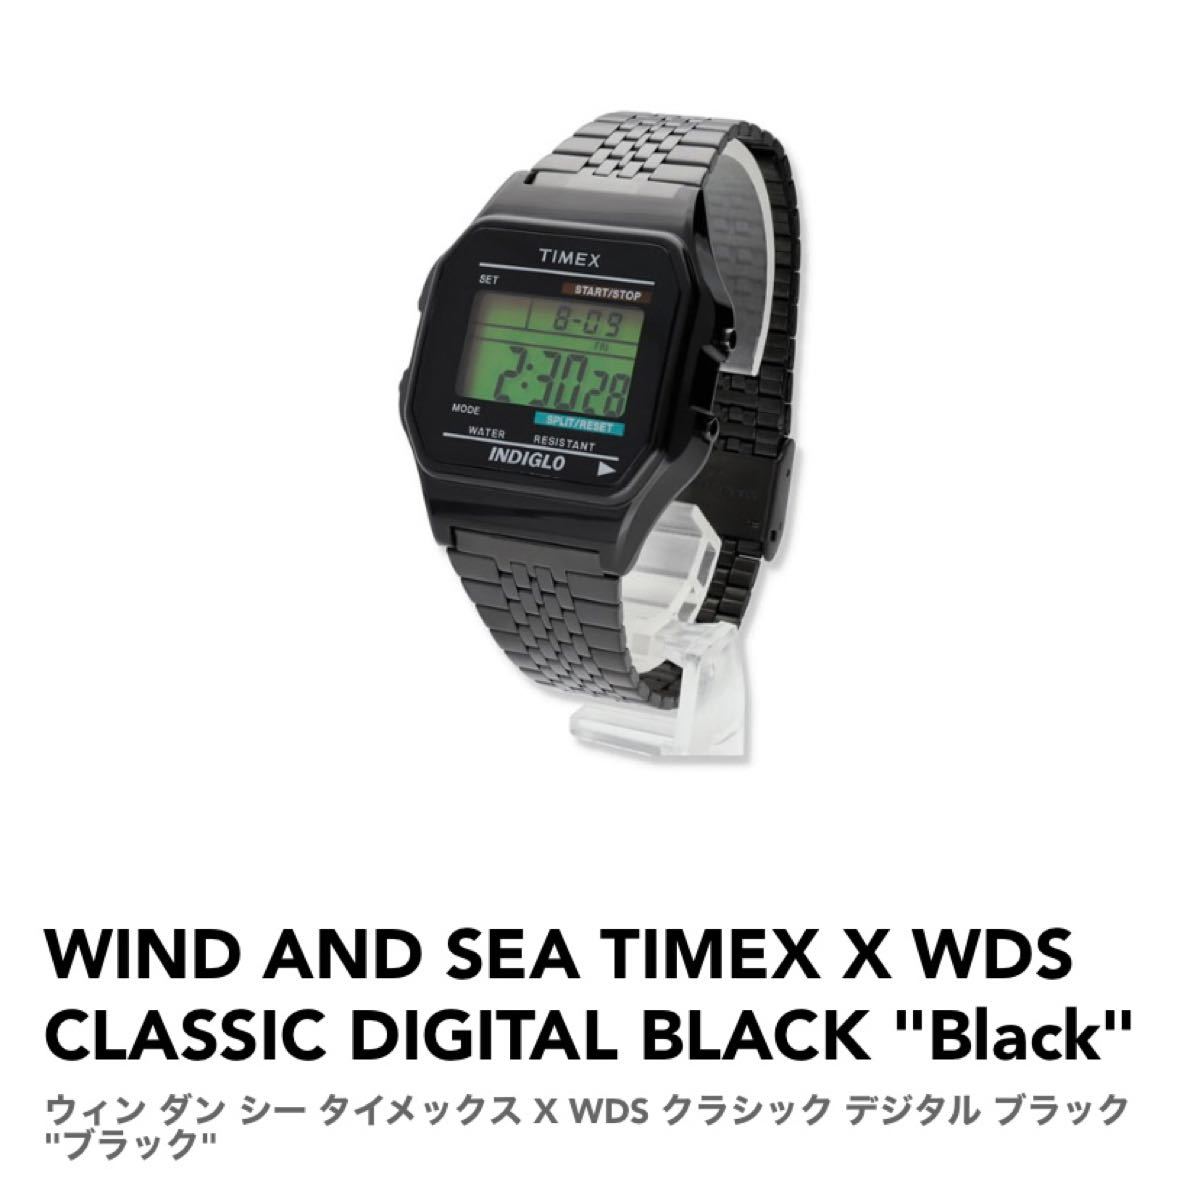 WIND AND SEA TIMEX X WDS CLASSIC DIGITAL BLACKウィン ダン シー 